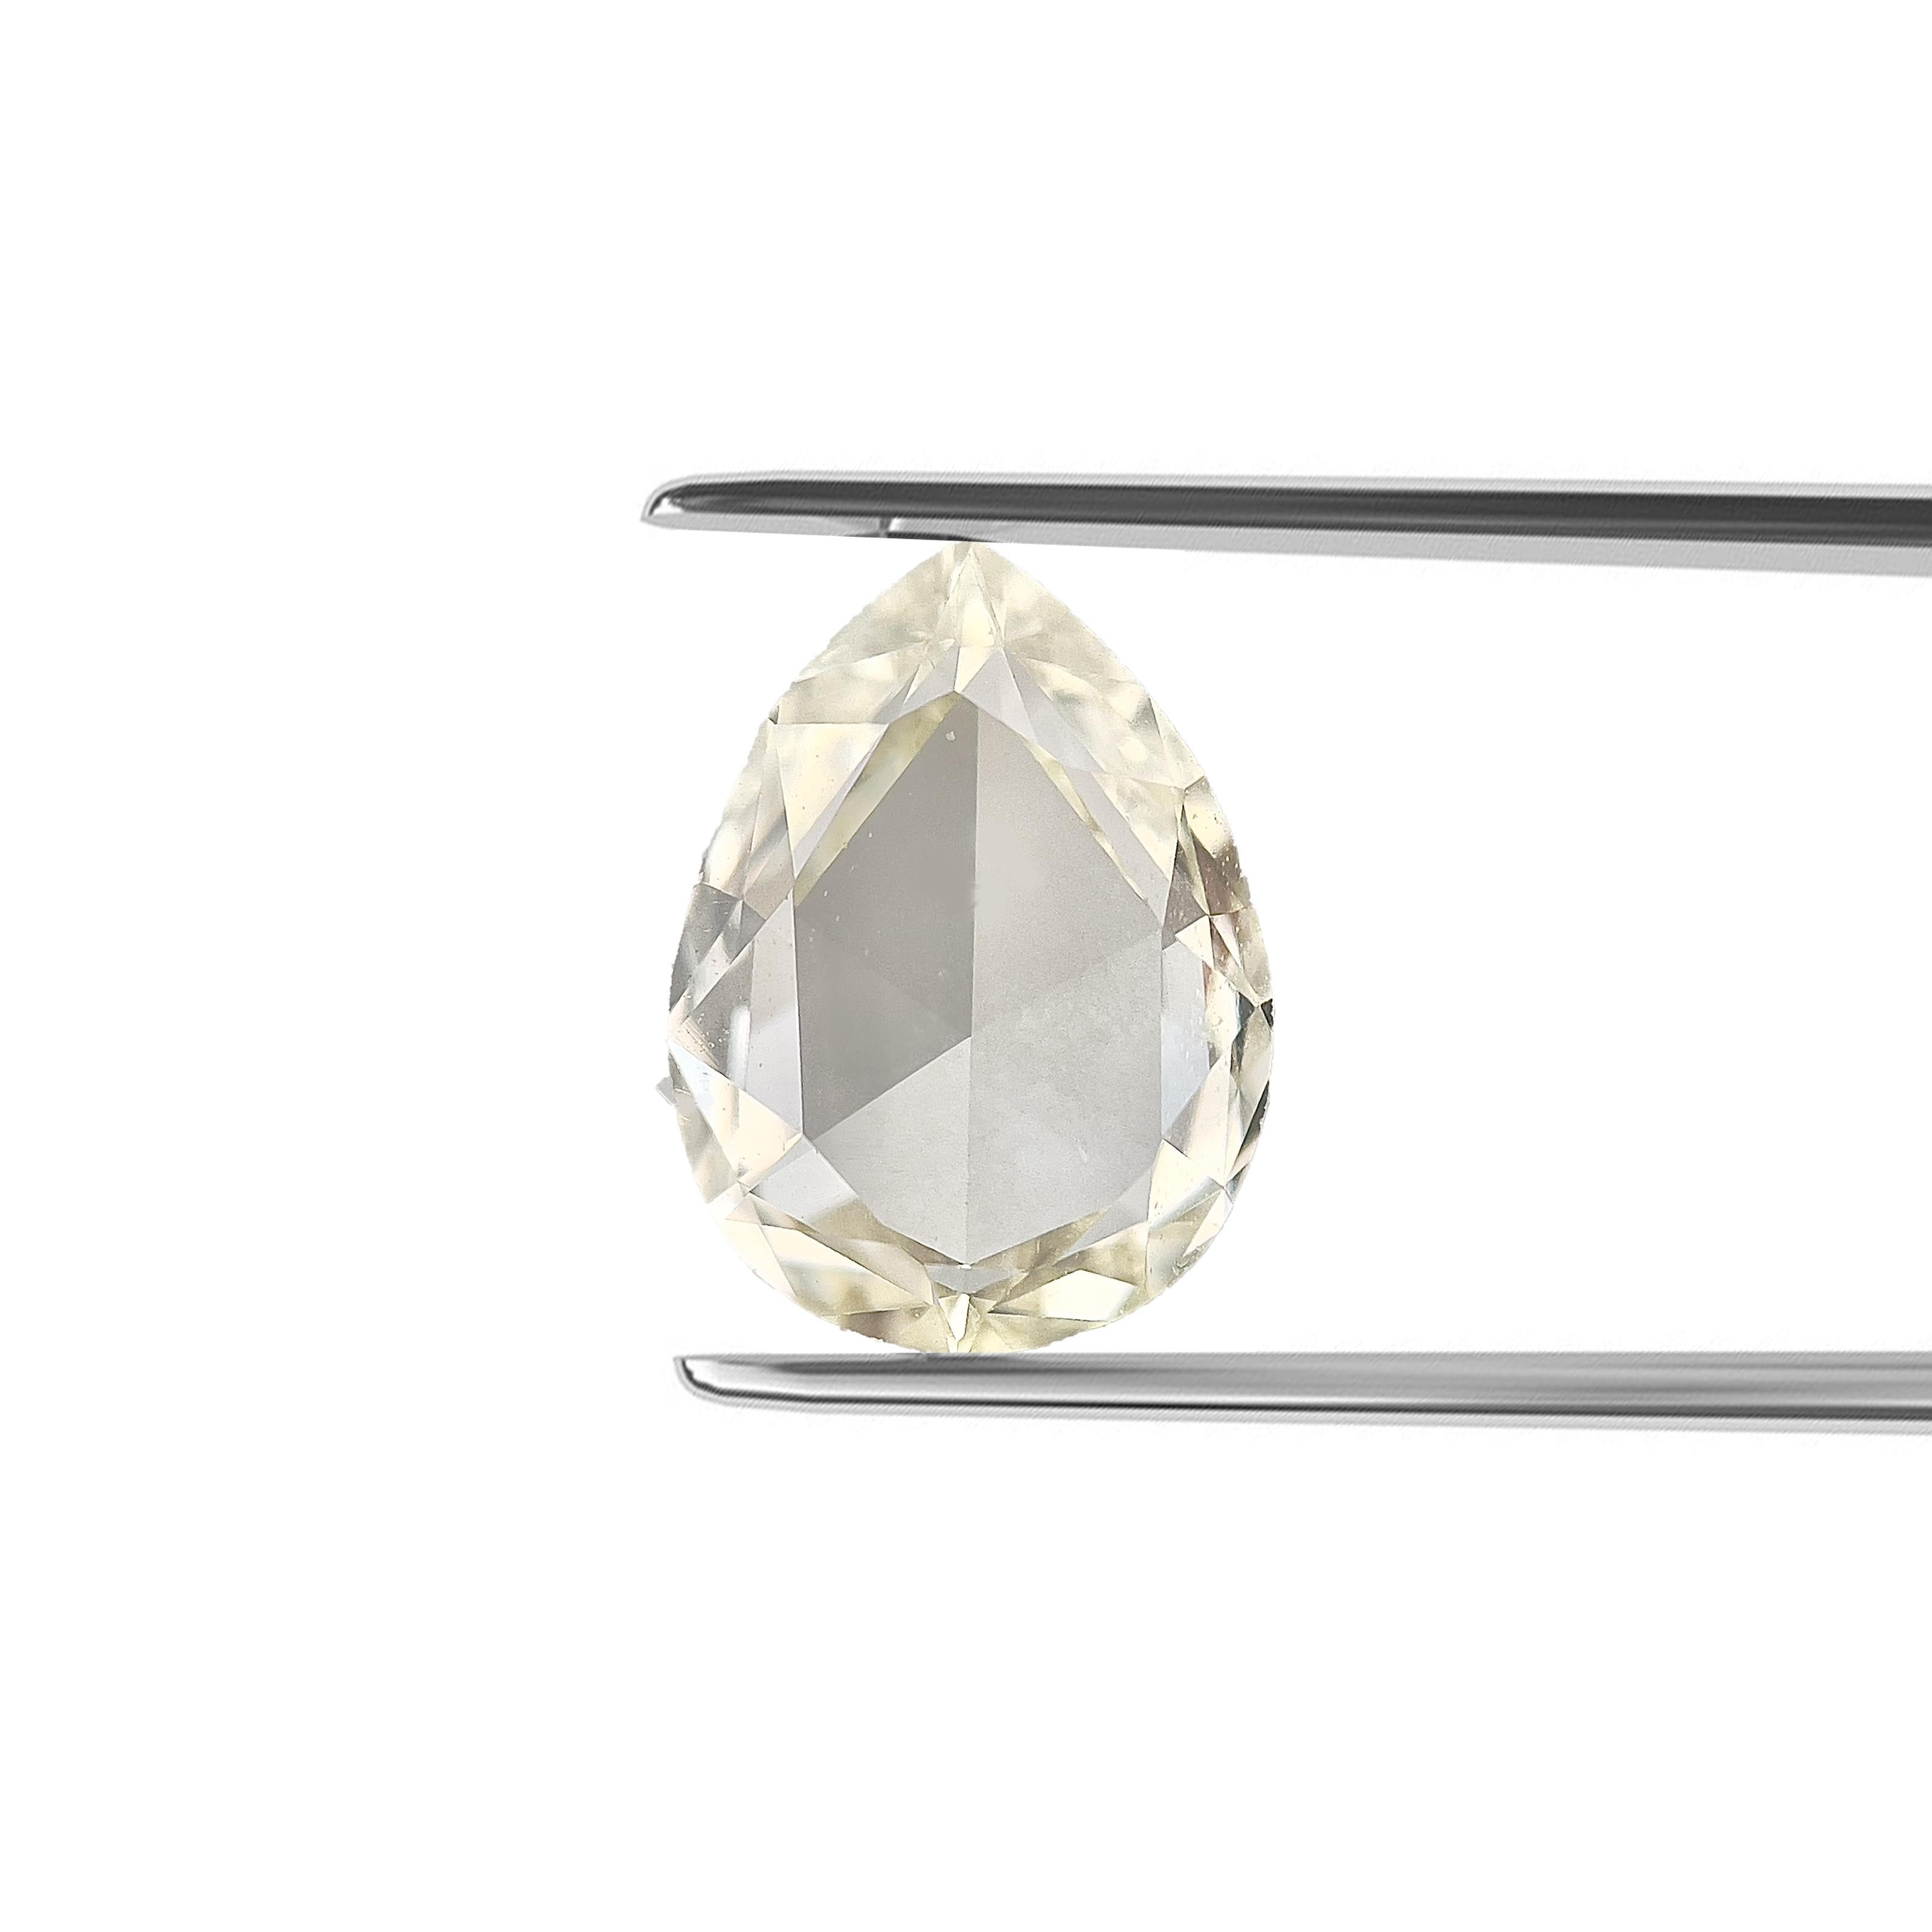 ITEM DESCRIPTION

ID #: NYC56926
Stone Shape: PEAR MODIFIED BRILLIANT
Diamond Weight: 1.05ct
Clarity: VS2
Color: M
Cut:	Excellent
Measurements: 8.69 x 6.43 x 2.23 mm
Depth %:	34.6%
Table %:	60%
Symmetry: Fair
Polish: Very Good
Fluorescence: